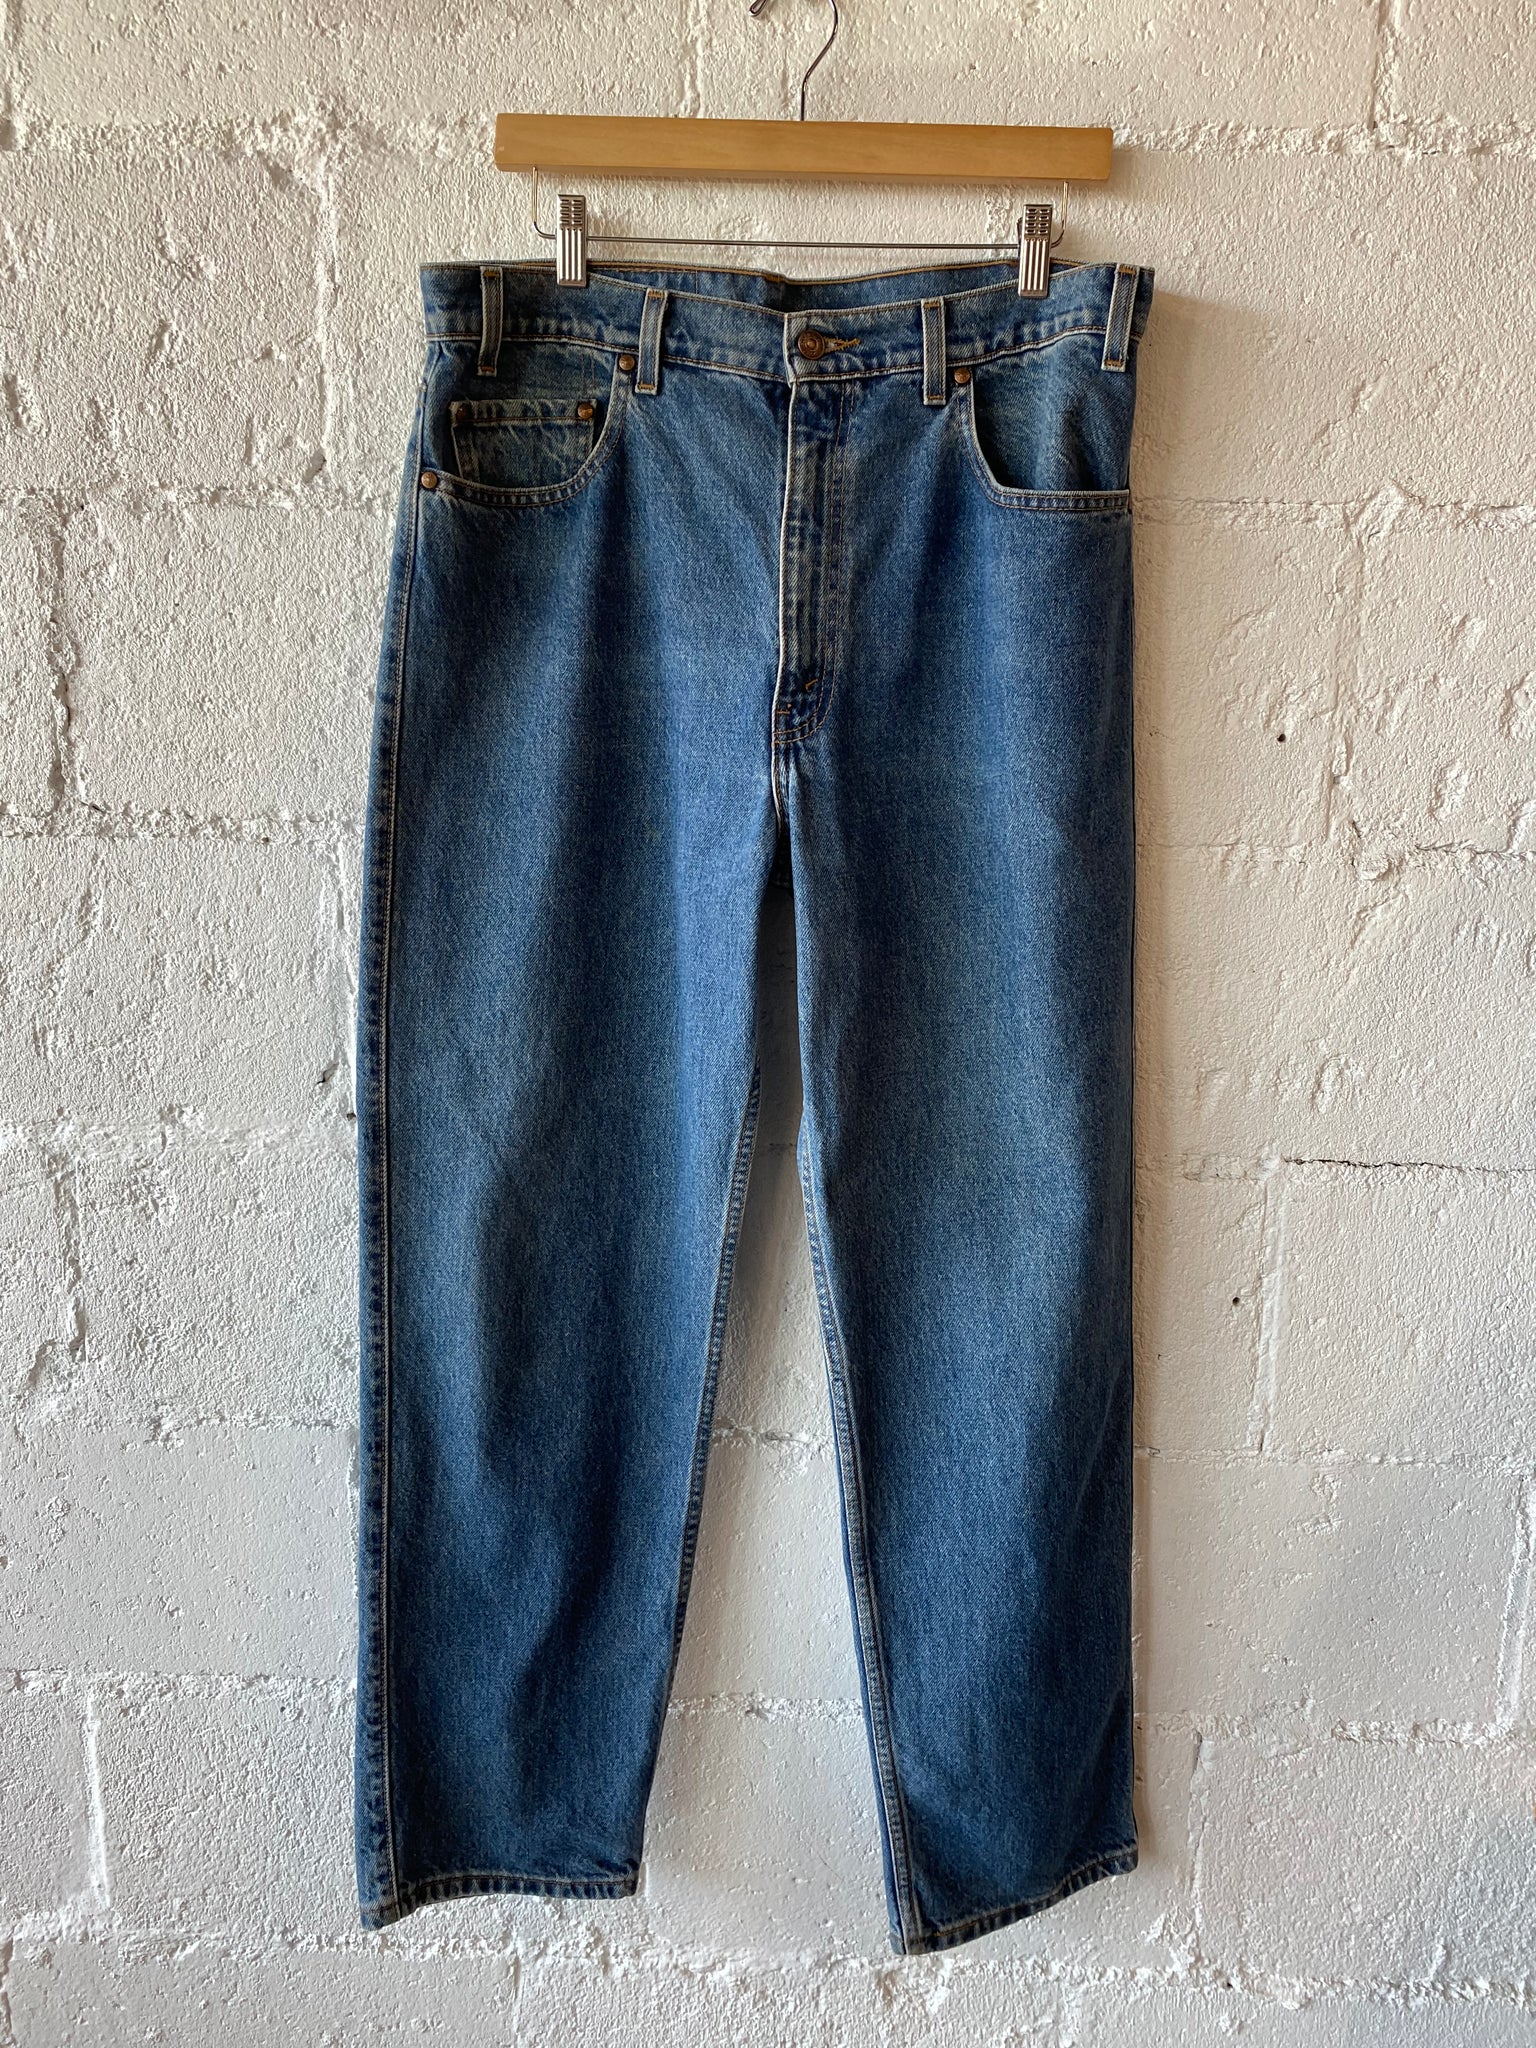 Levi's 540 Denim Jeans